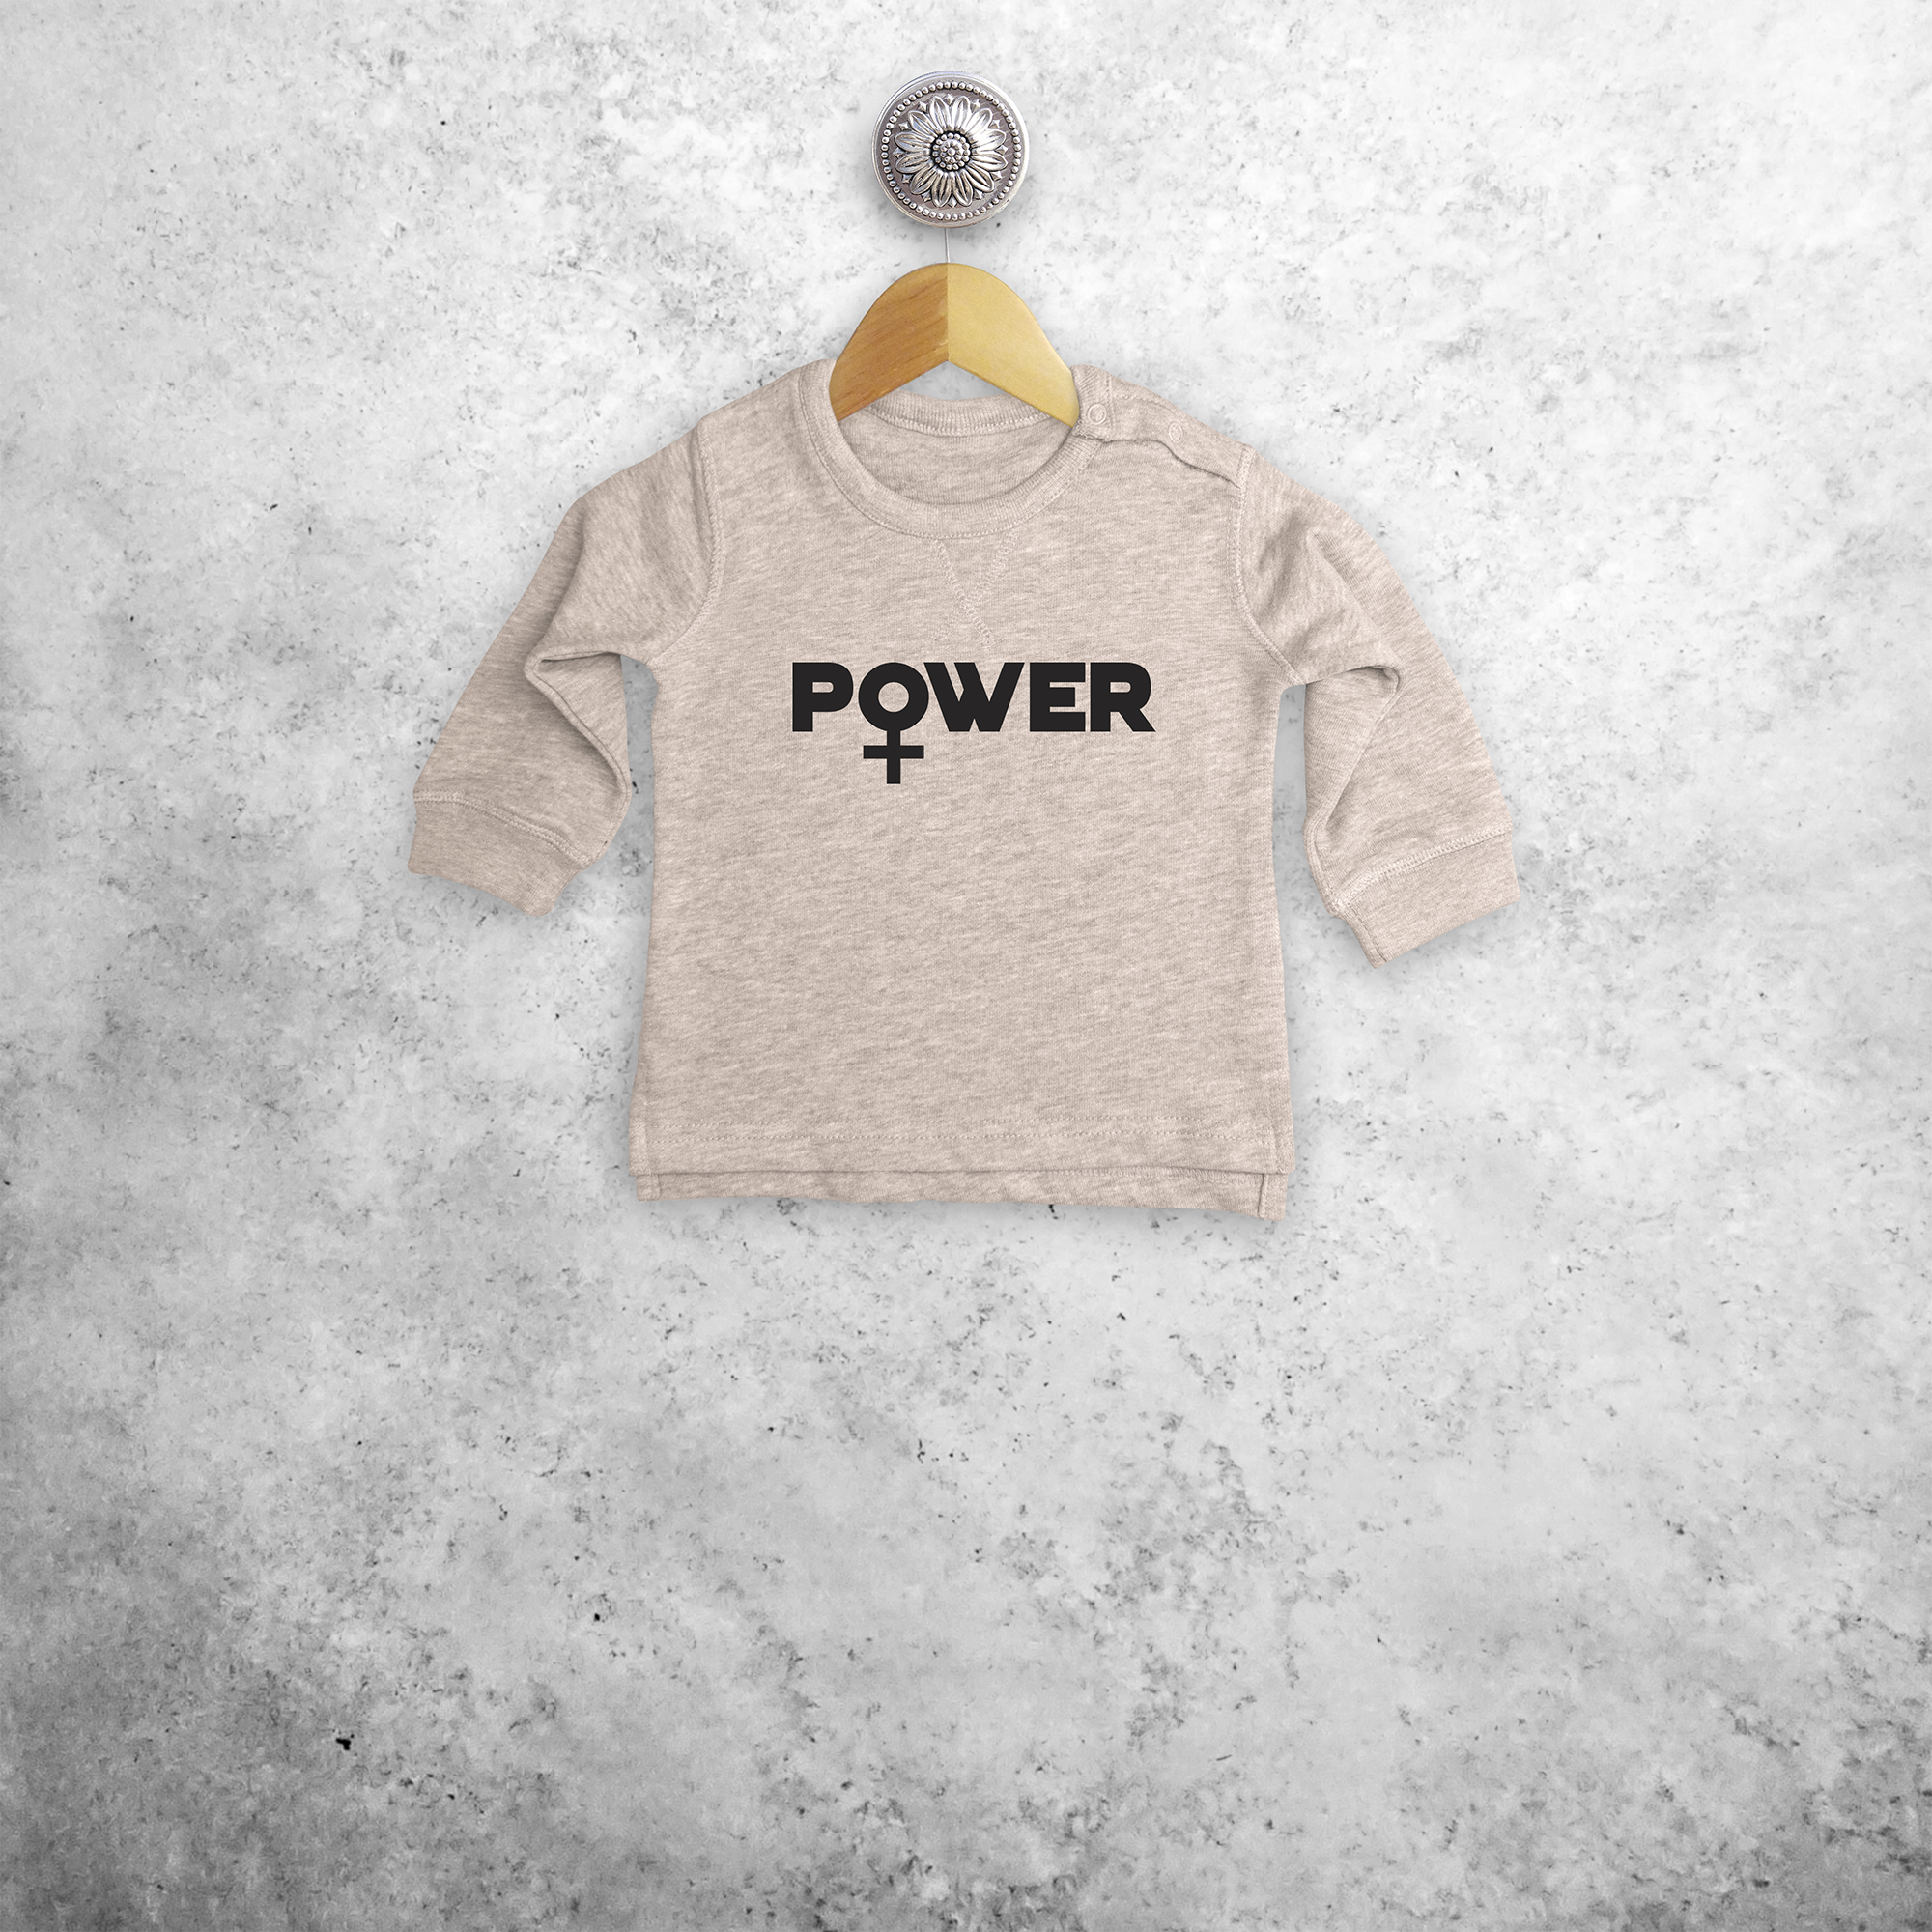 'Power' baby trui